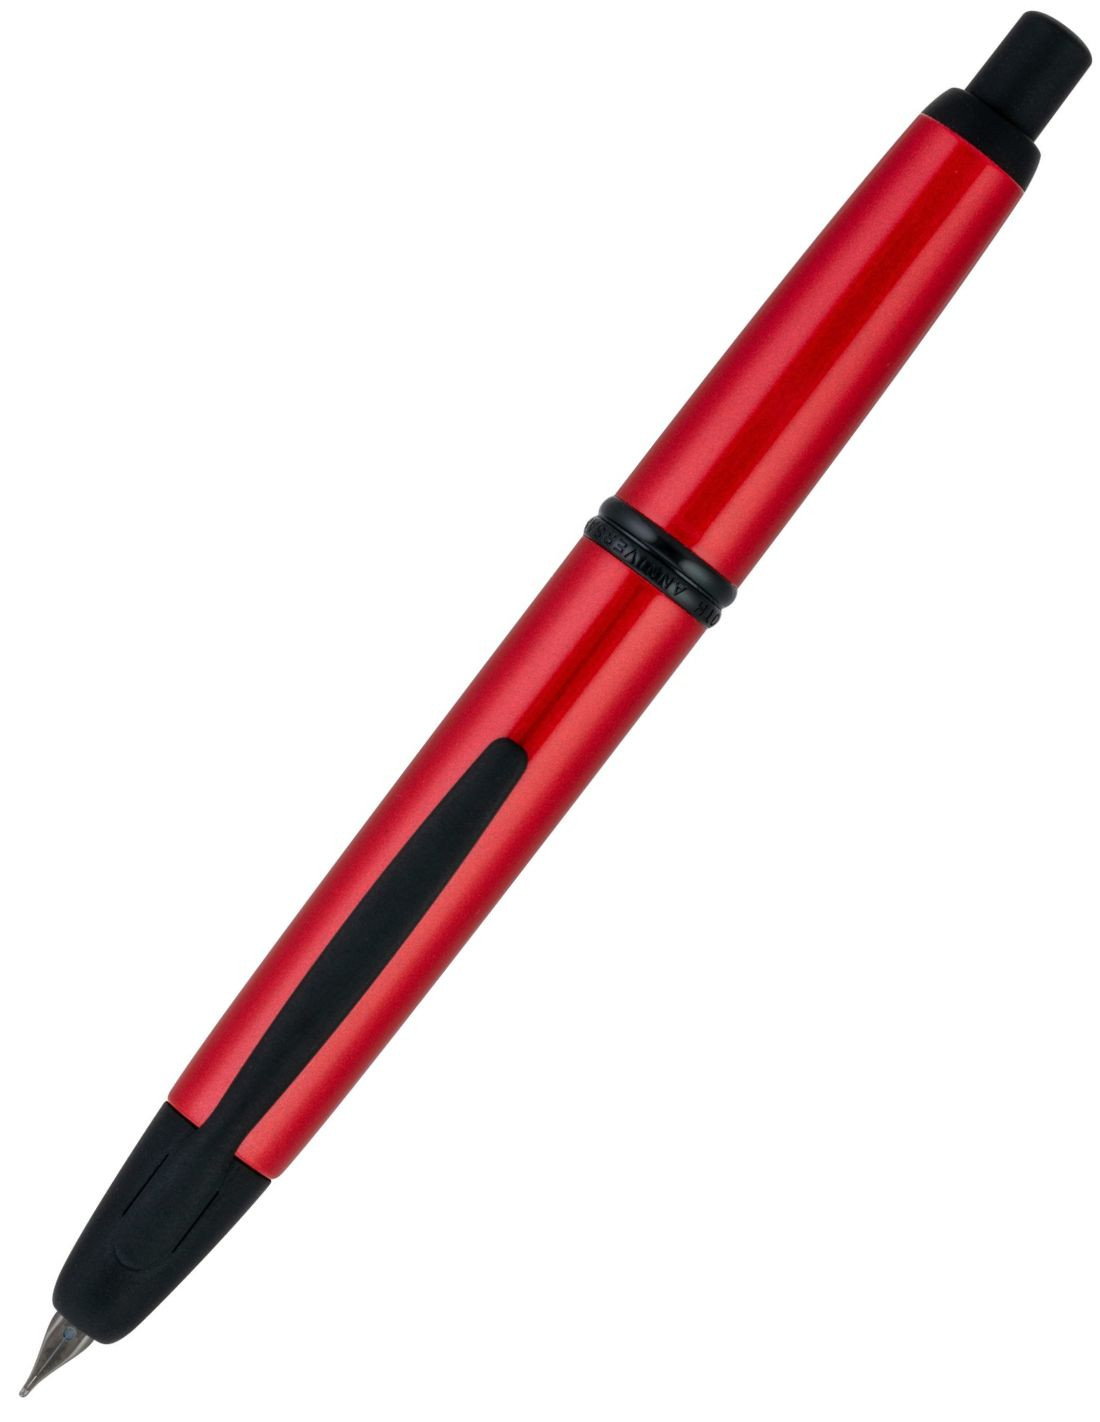 Recharge pour stylo-bille S.T.Dupont (ancien modèle) - pointe moyenne